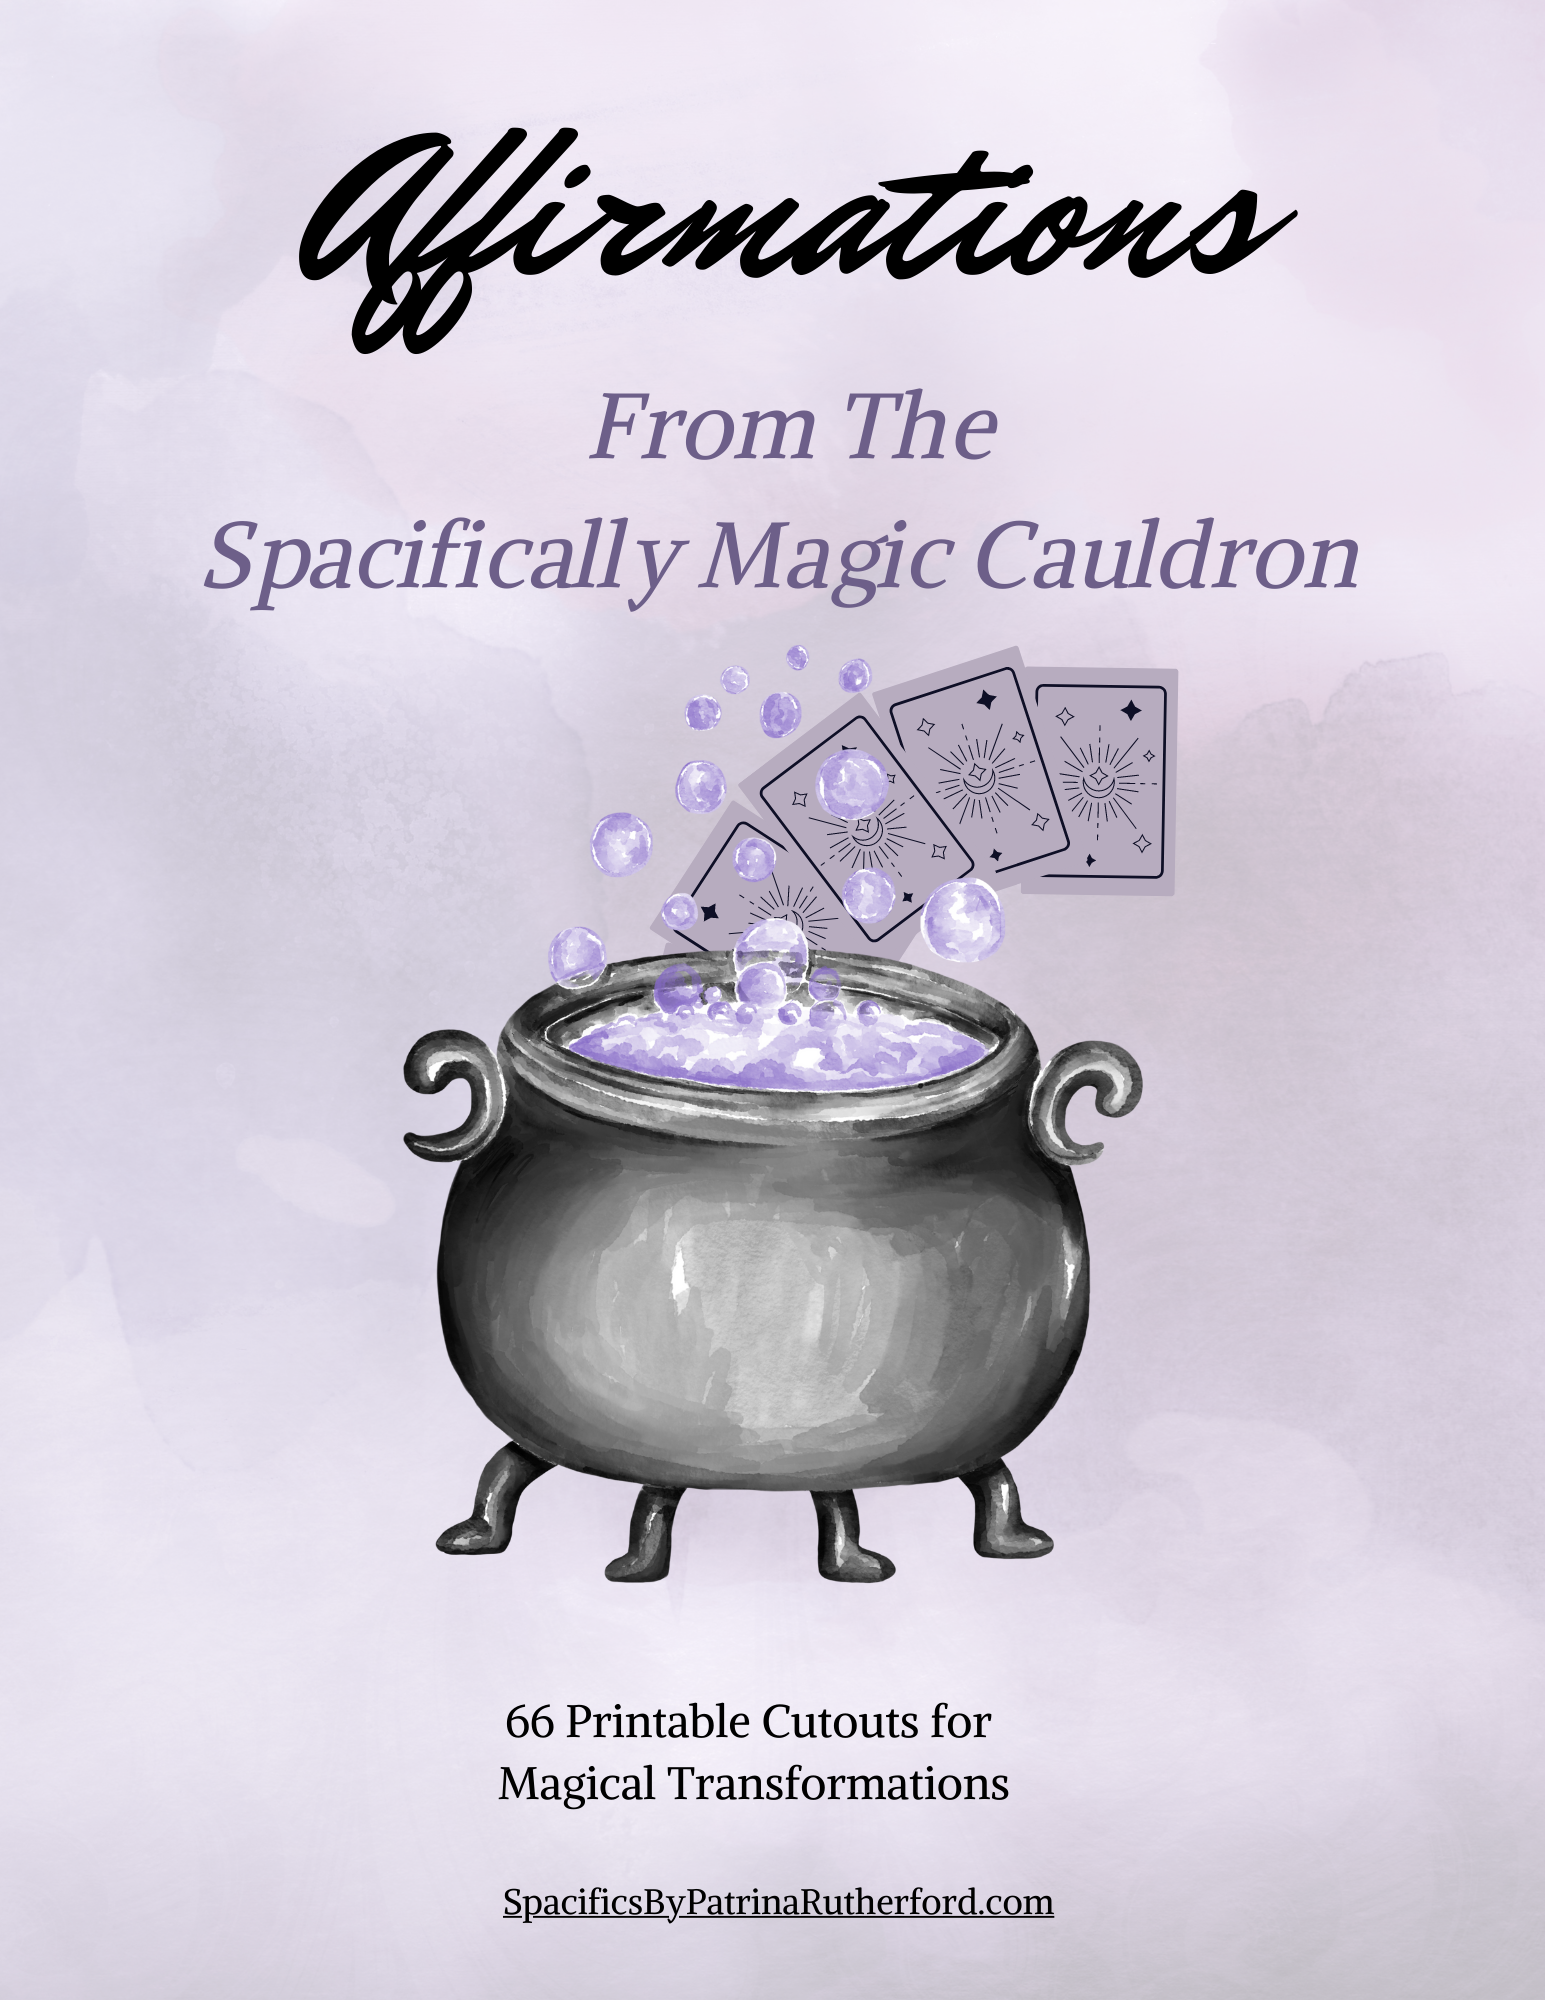 Spacifically Magic Cauldron